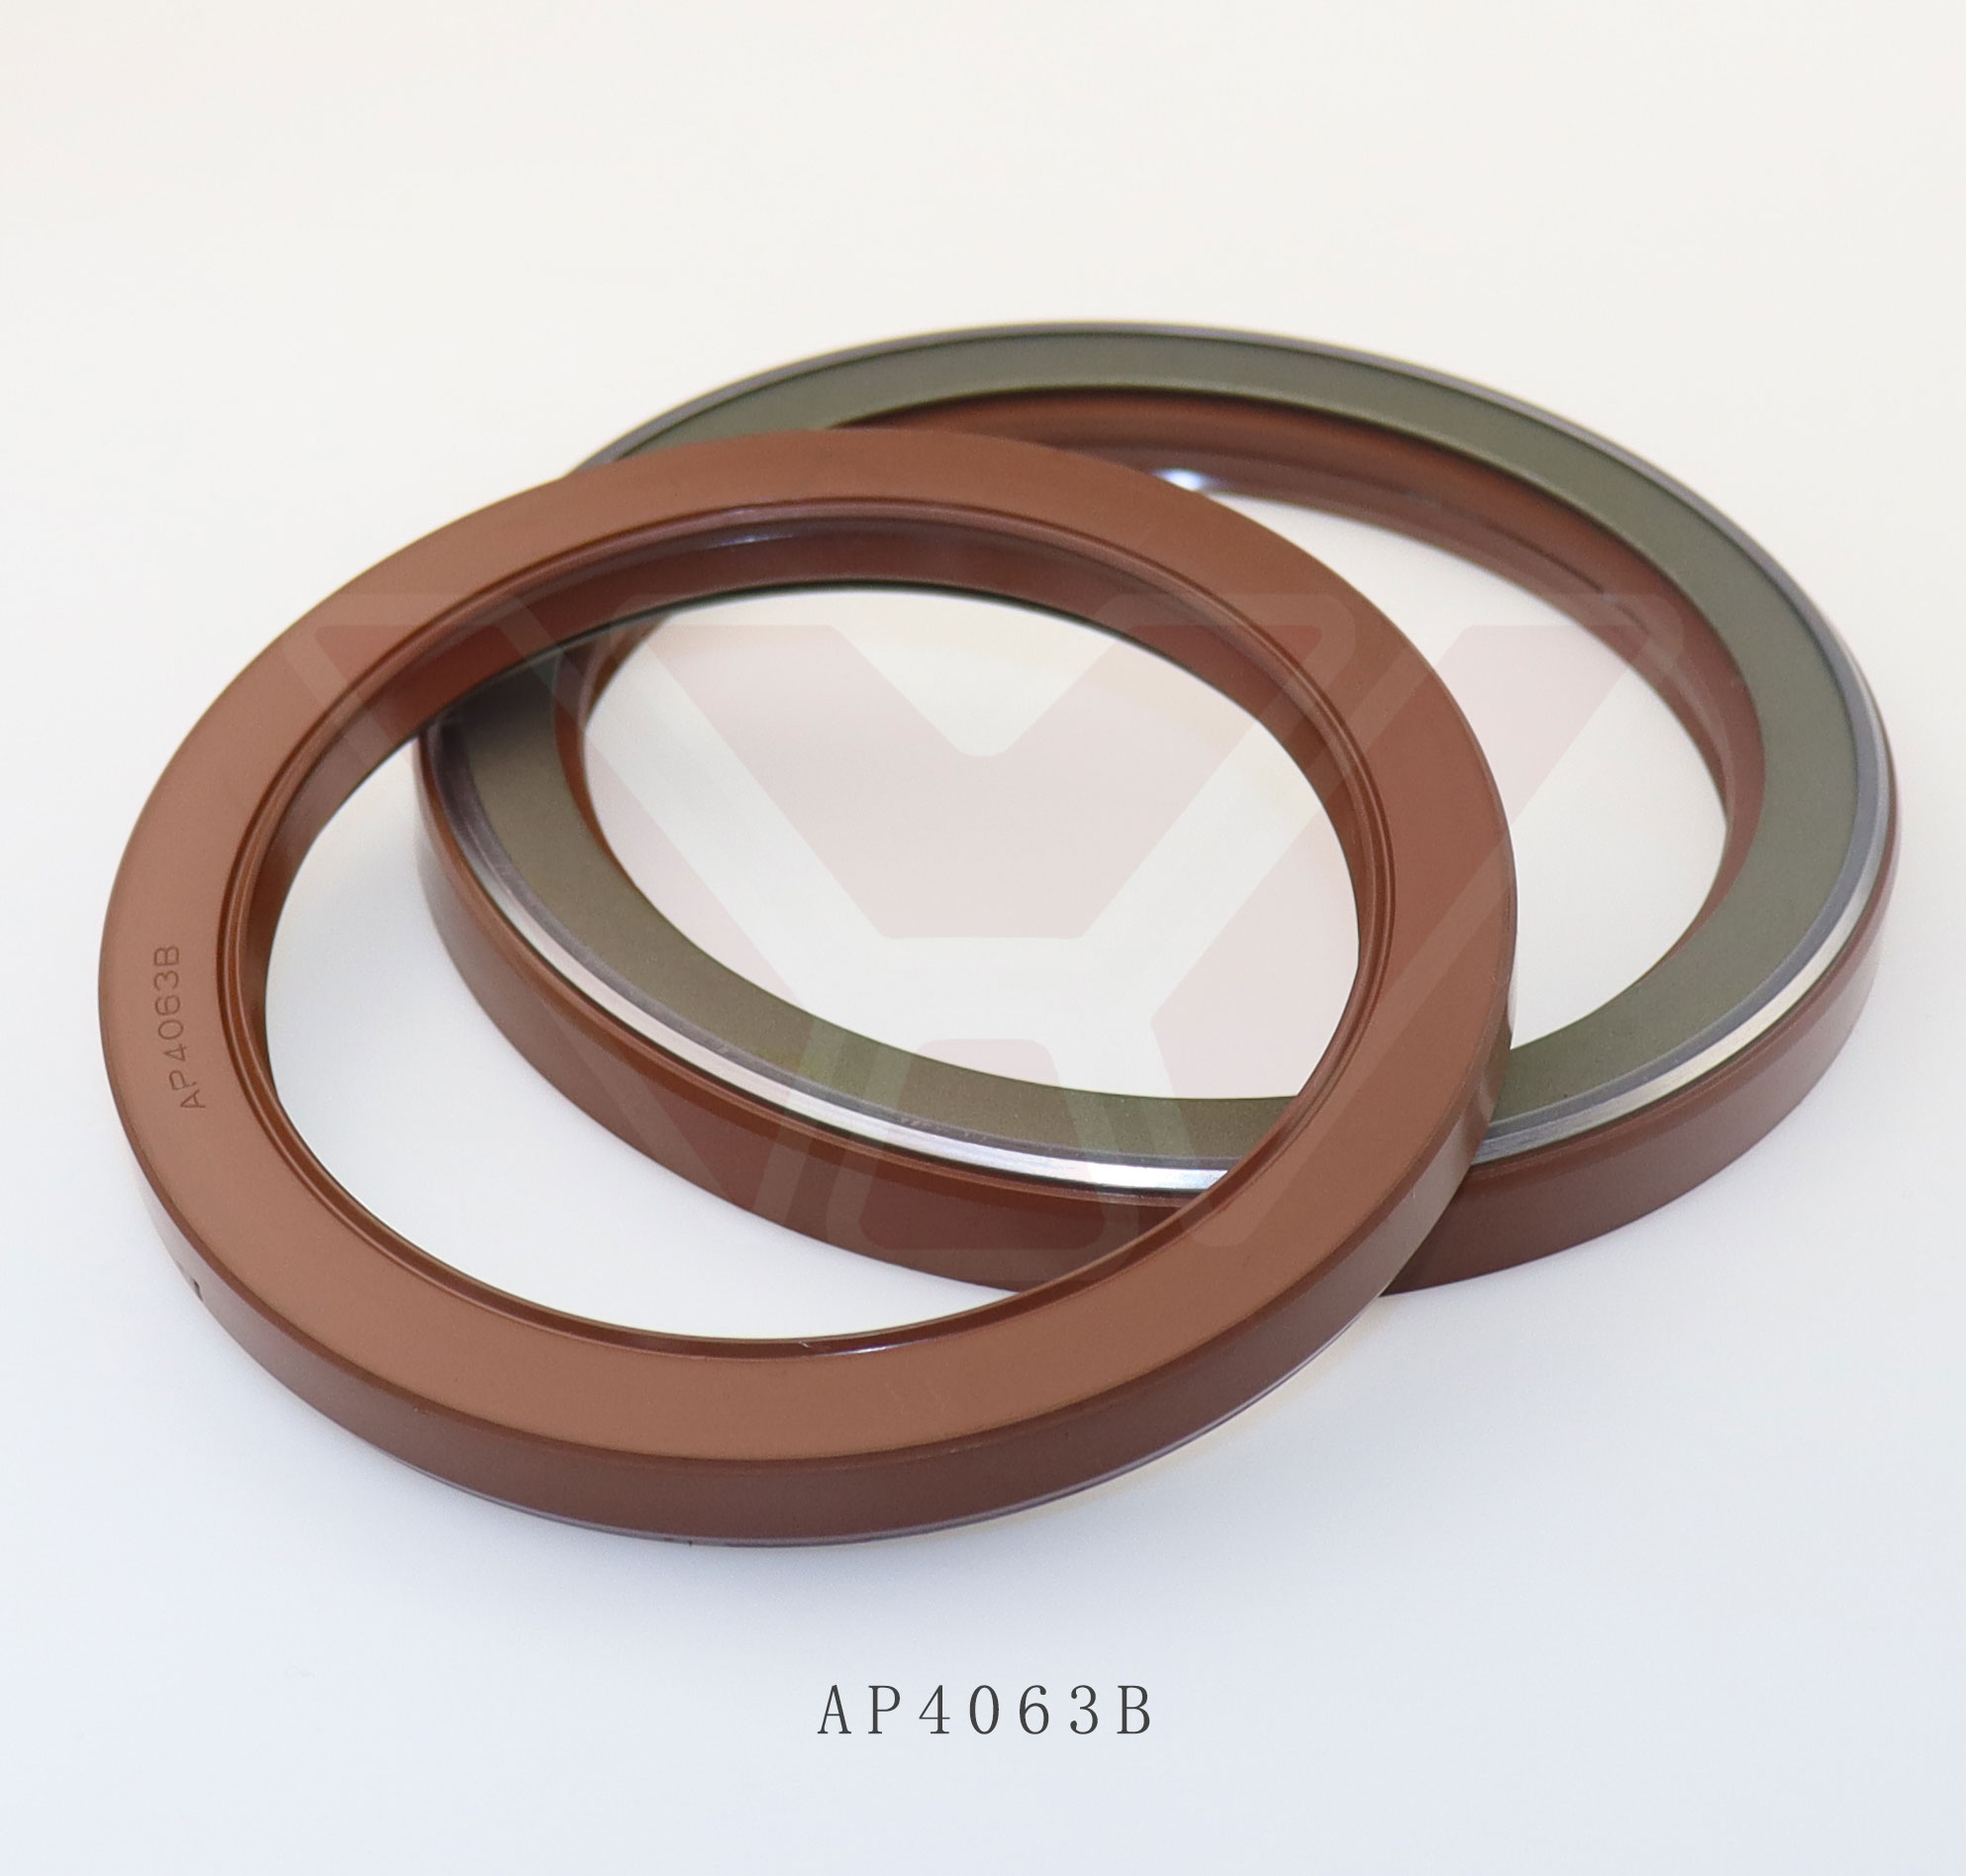 O Ring And Oil Seal of Hydraulic Pump Kobelco Model 7150